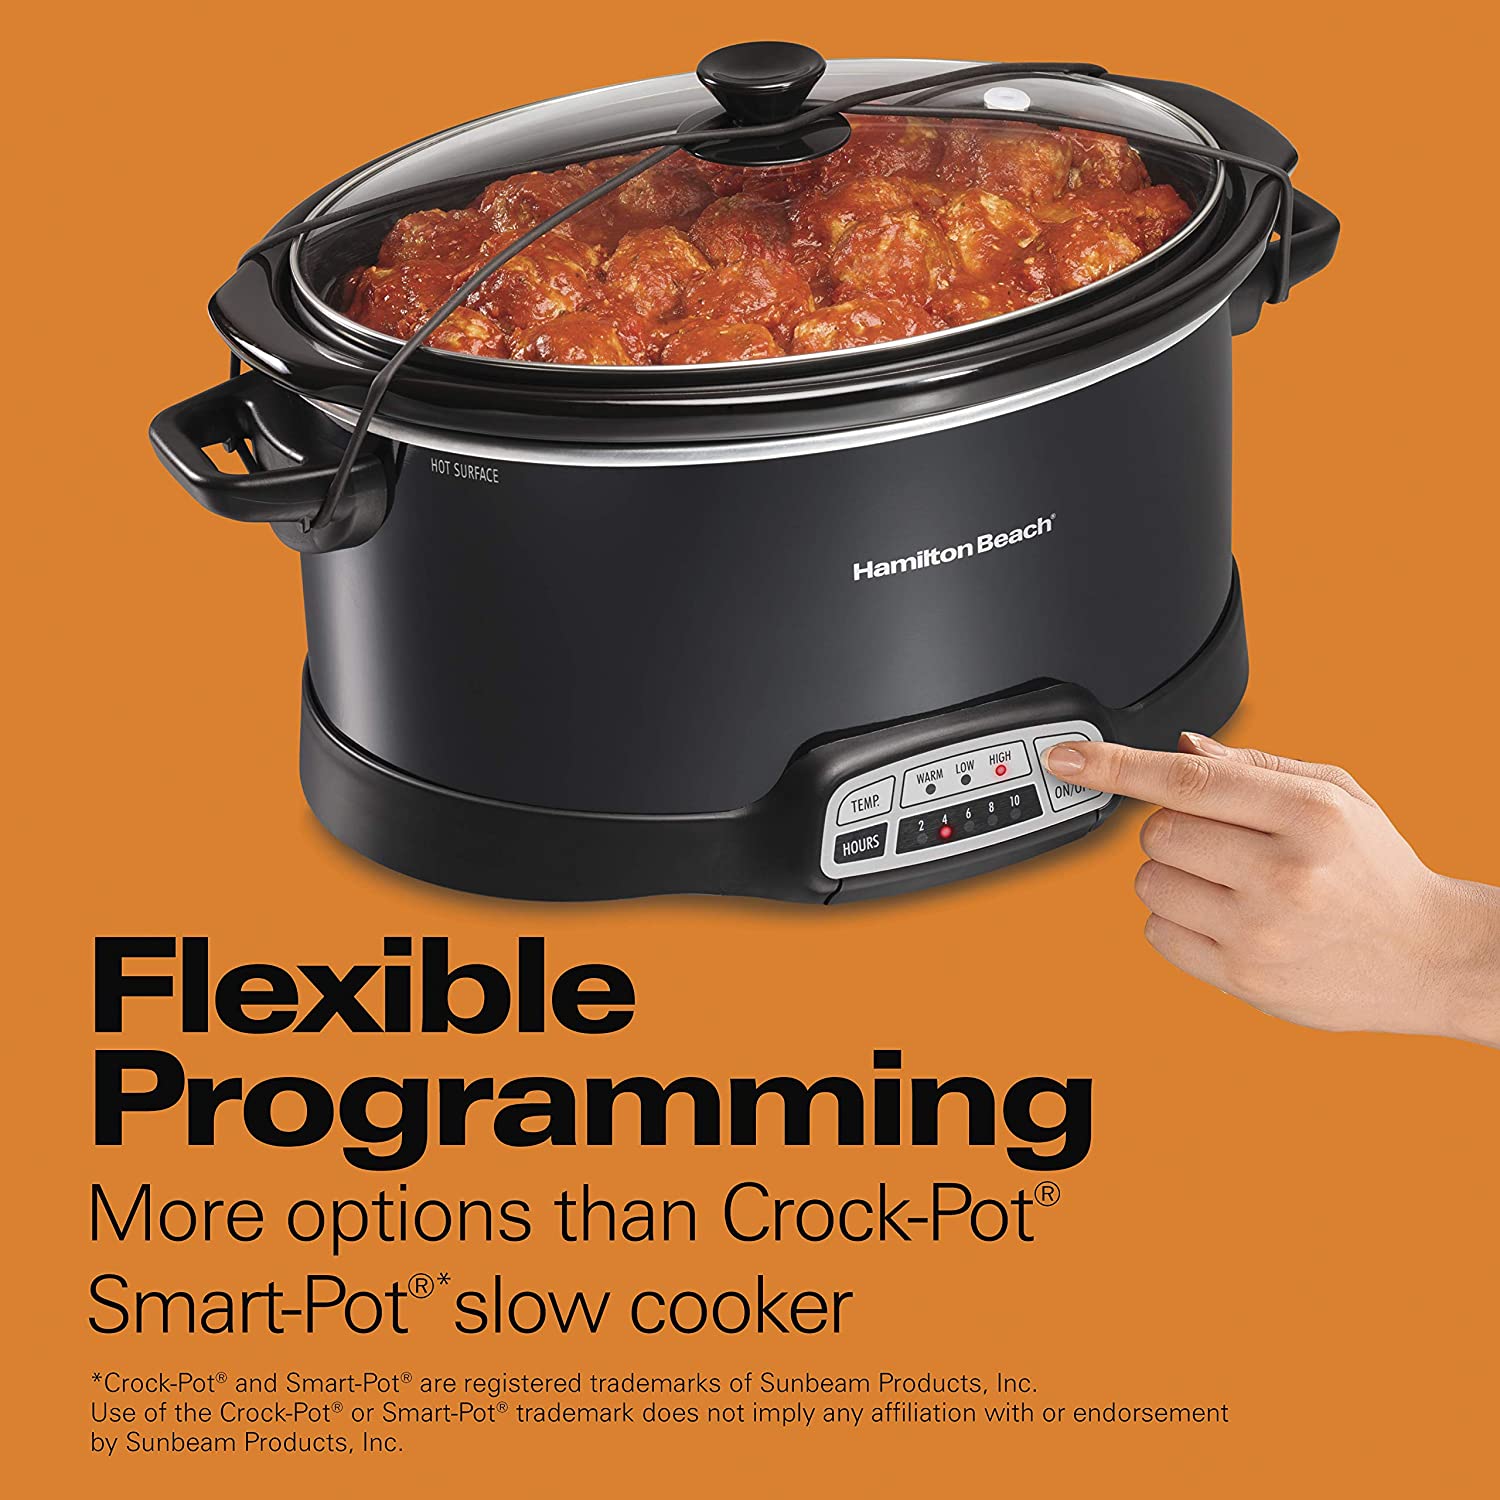 Hamilton Beach Programmable Slow Cooker 33474 review flexible programming